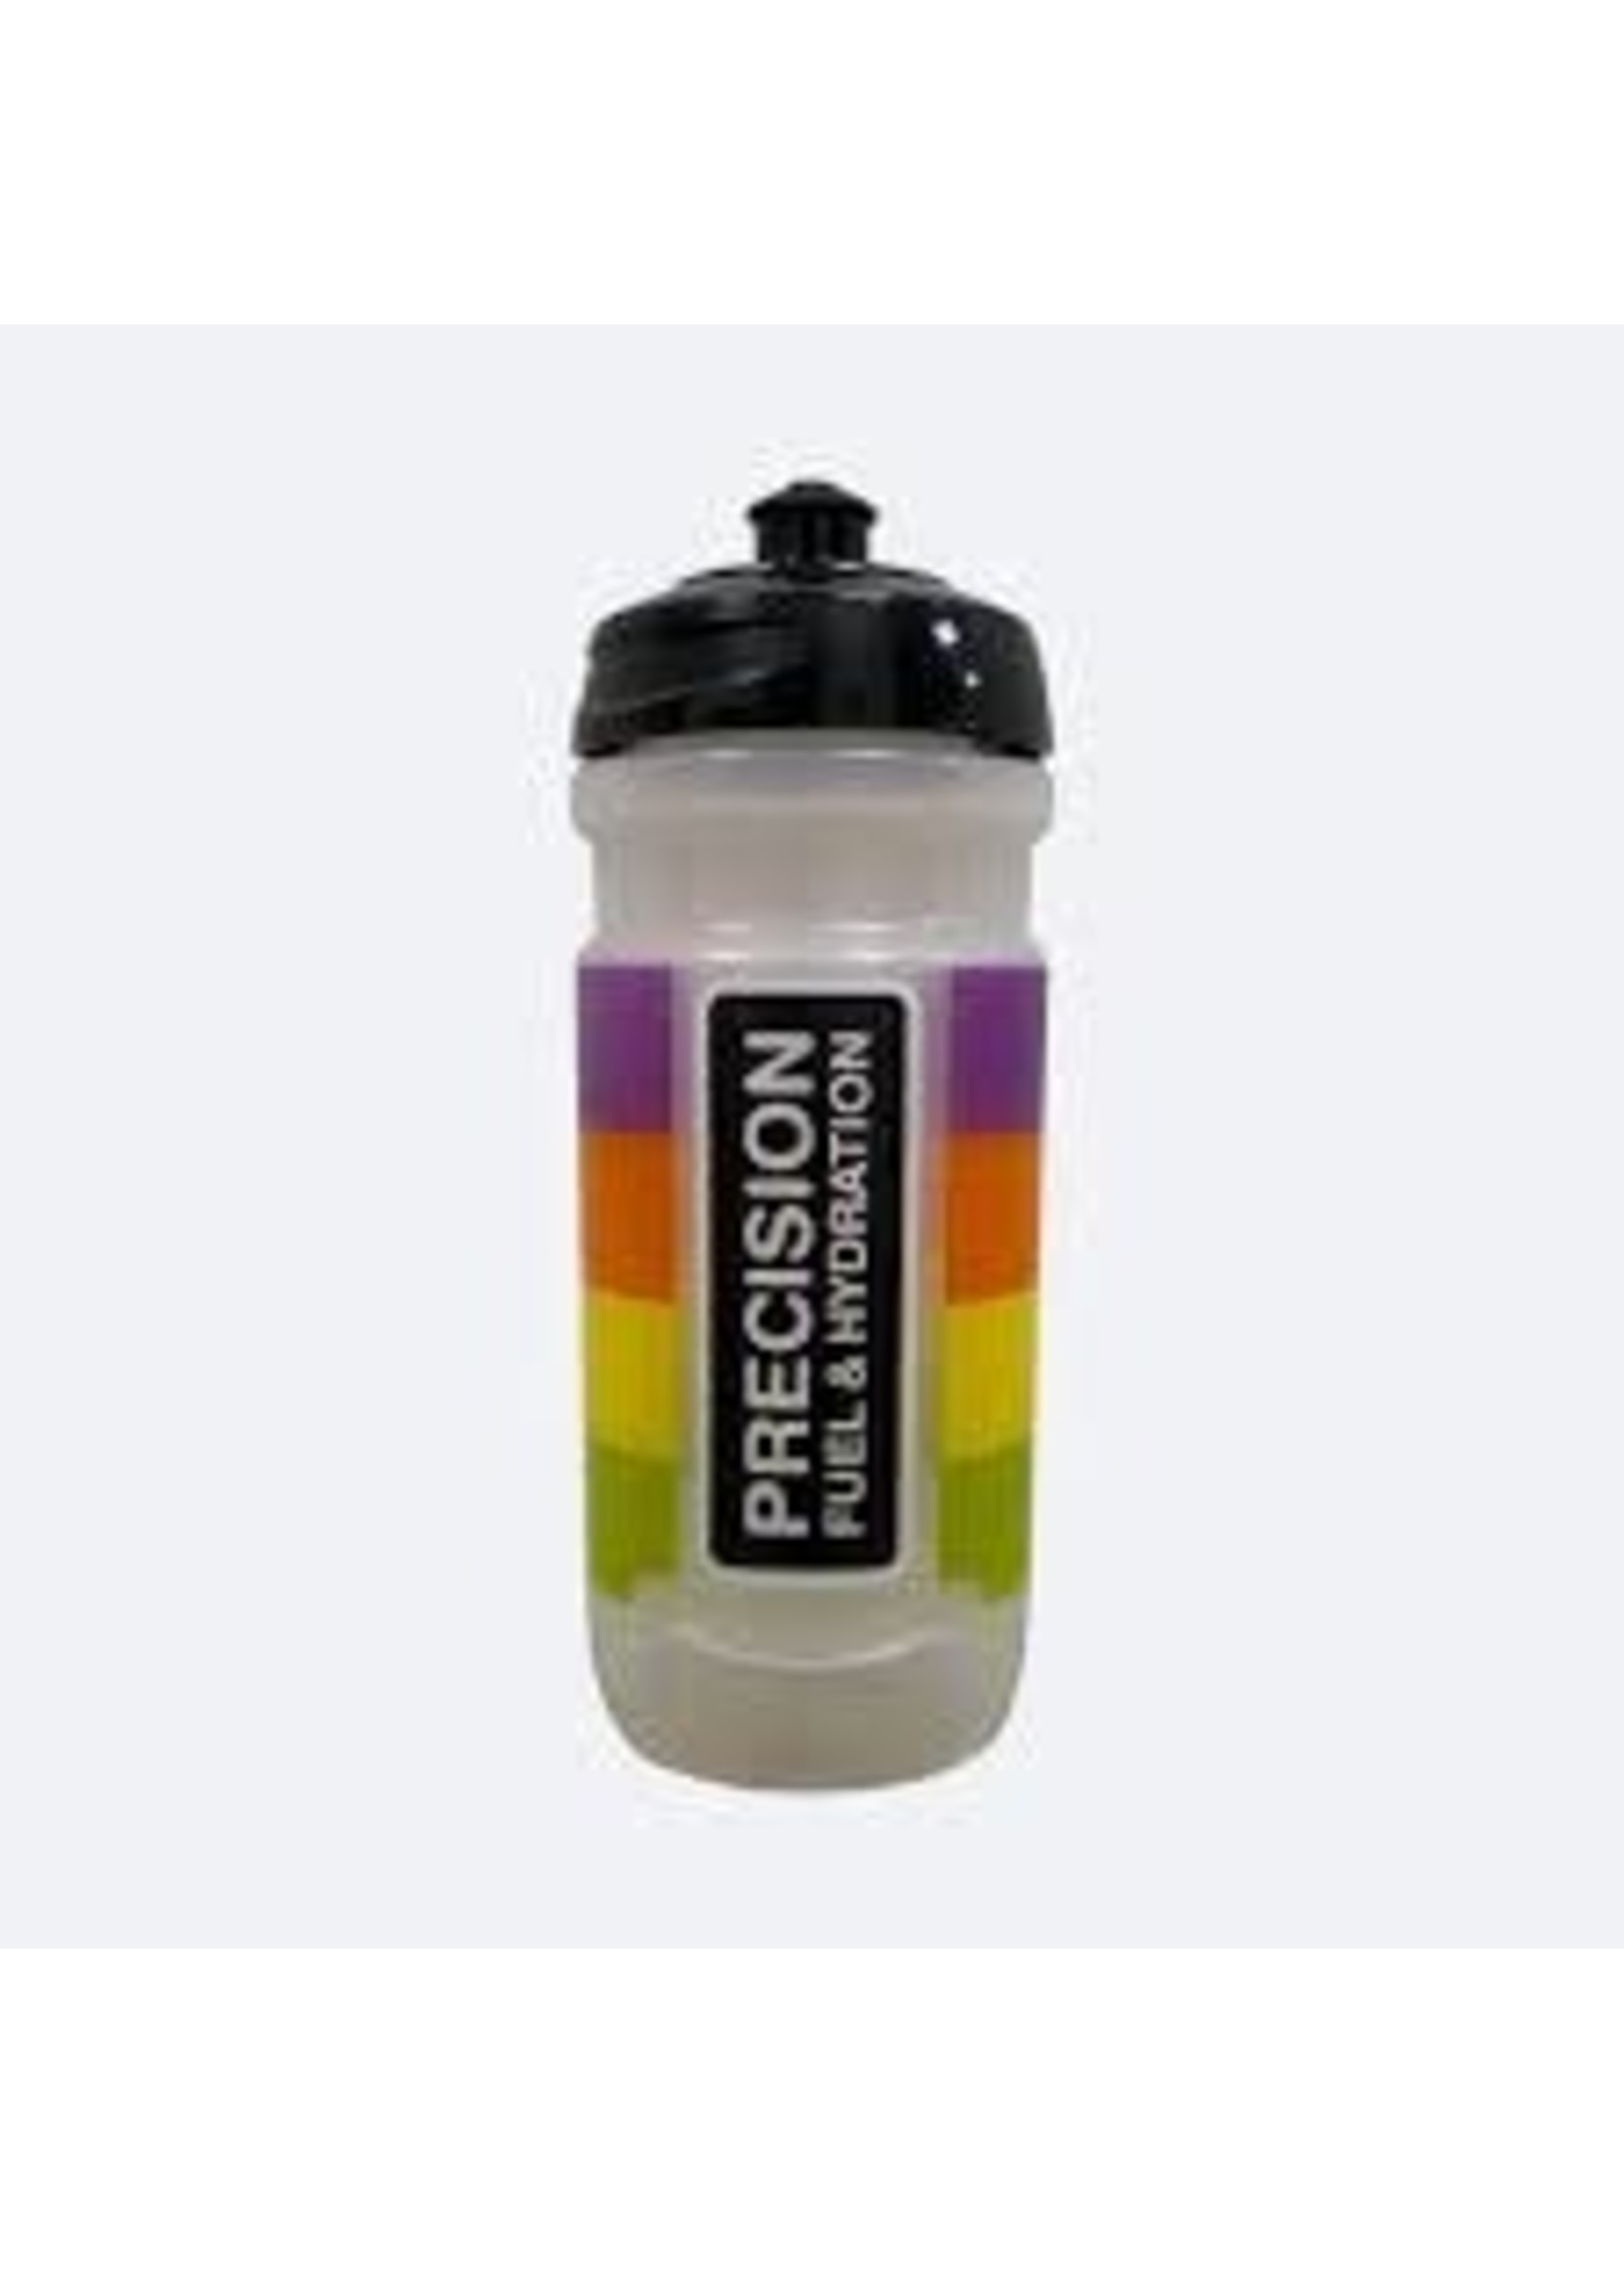 Precision Hydration PH Bottle 16oz